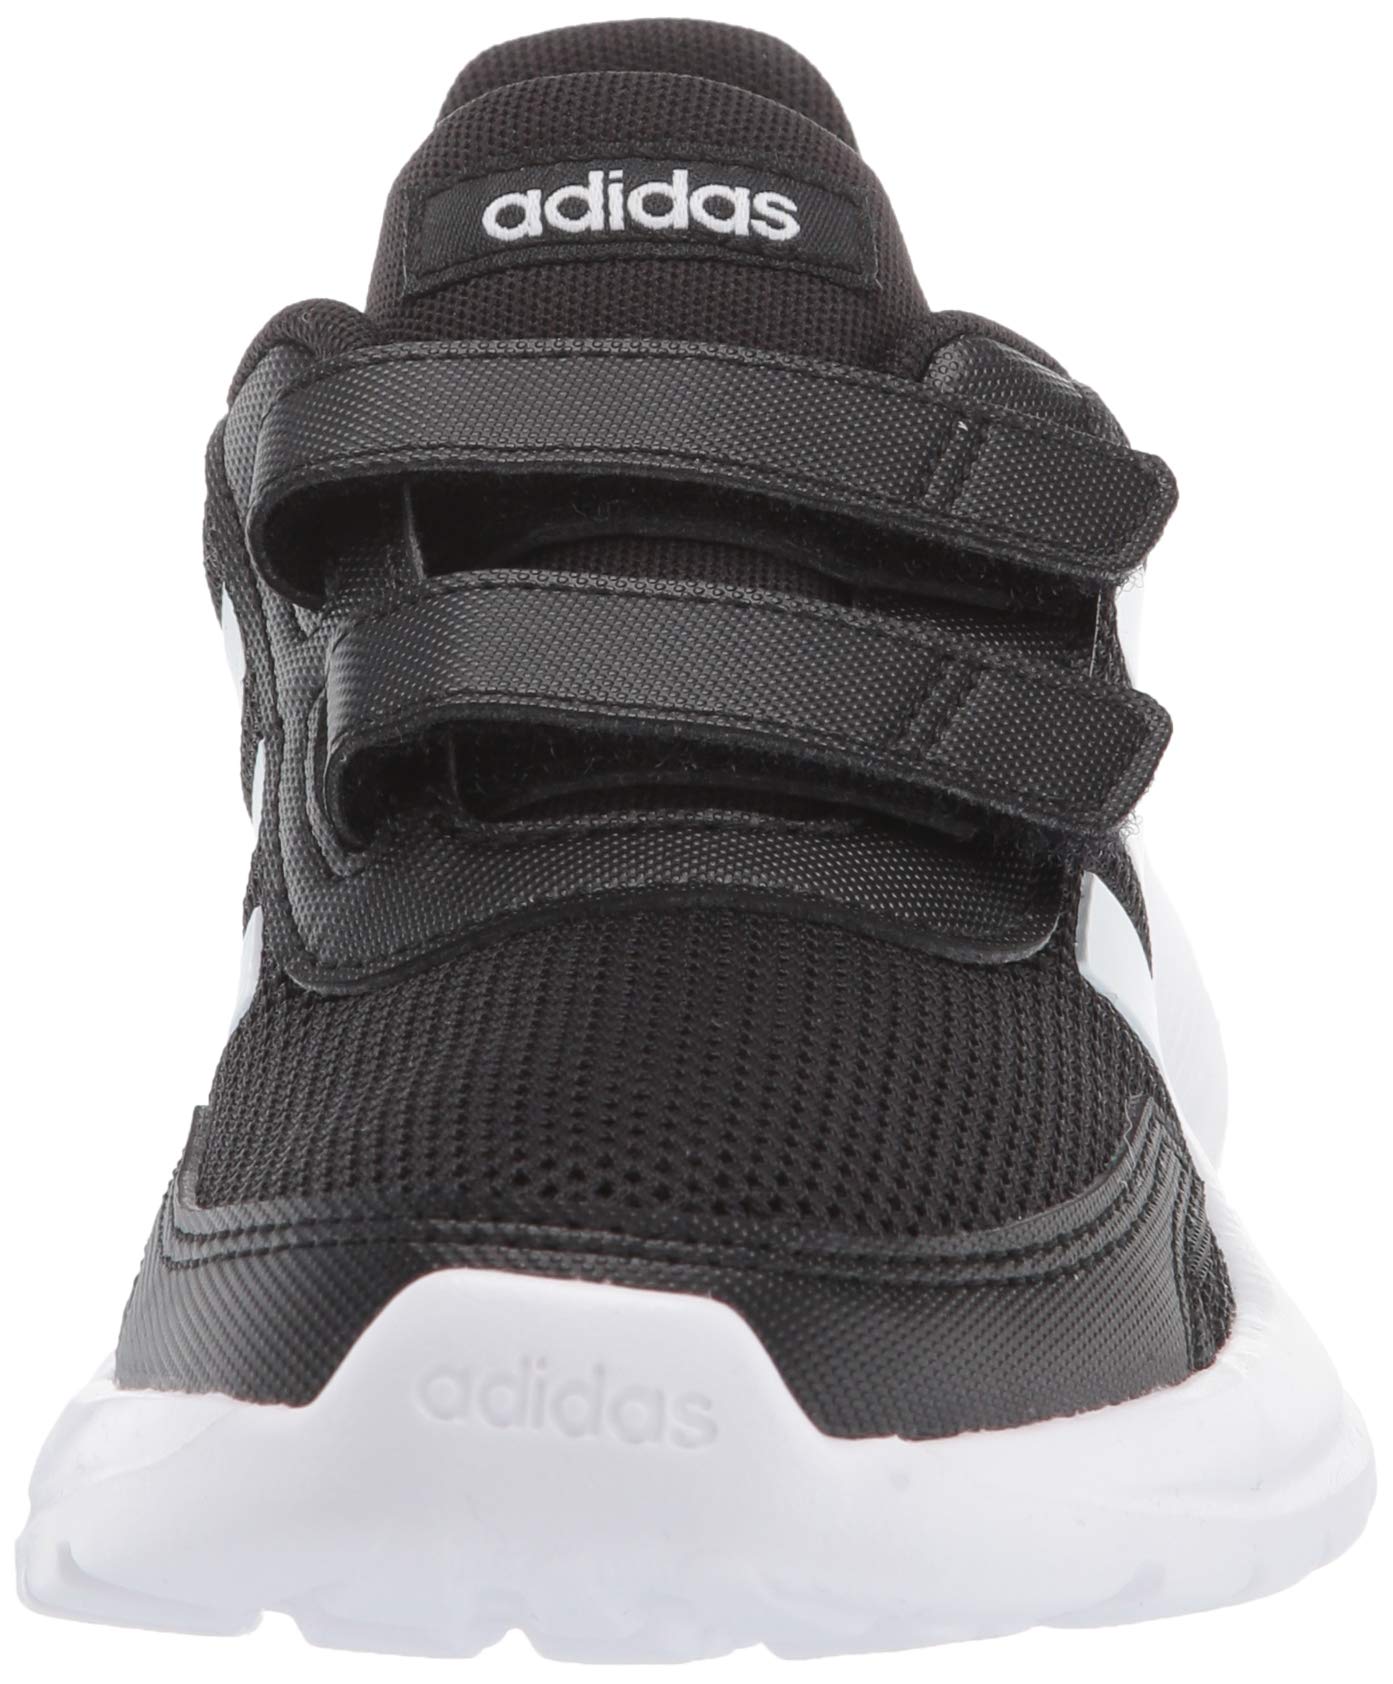 adidas Unisex-Child Tensaur Run C Sneaker